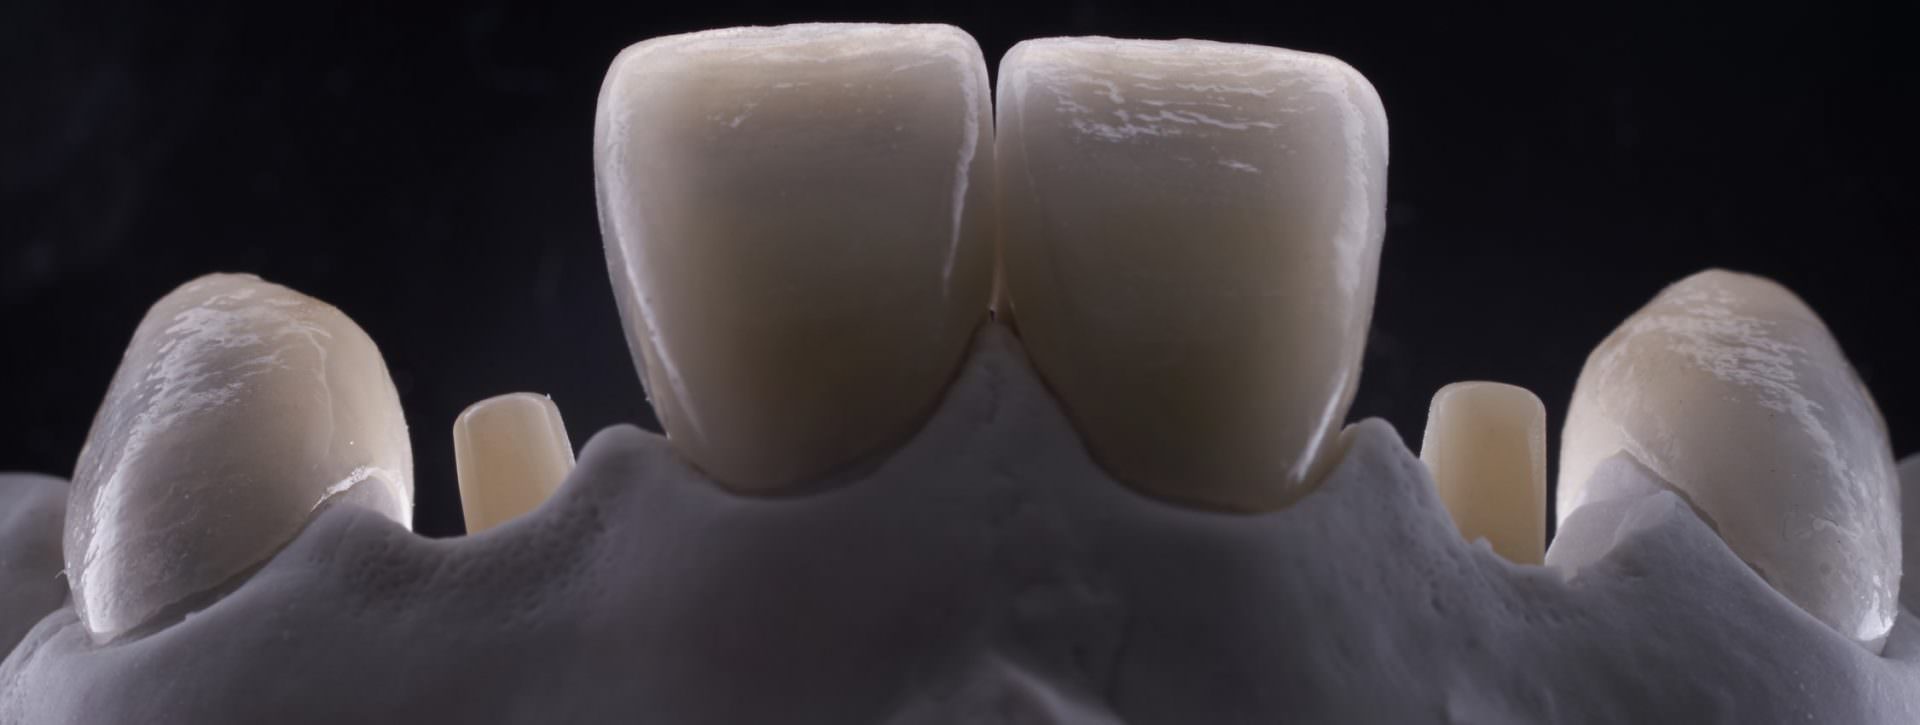 Zirconia Dental Implant by Straumann - Light Transmission